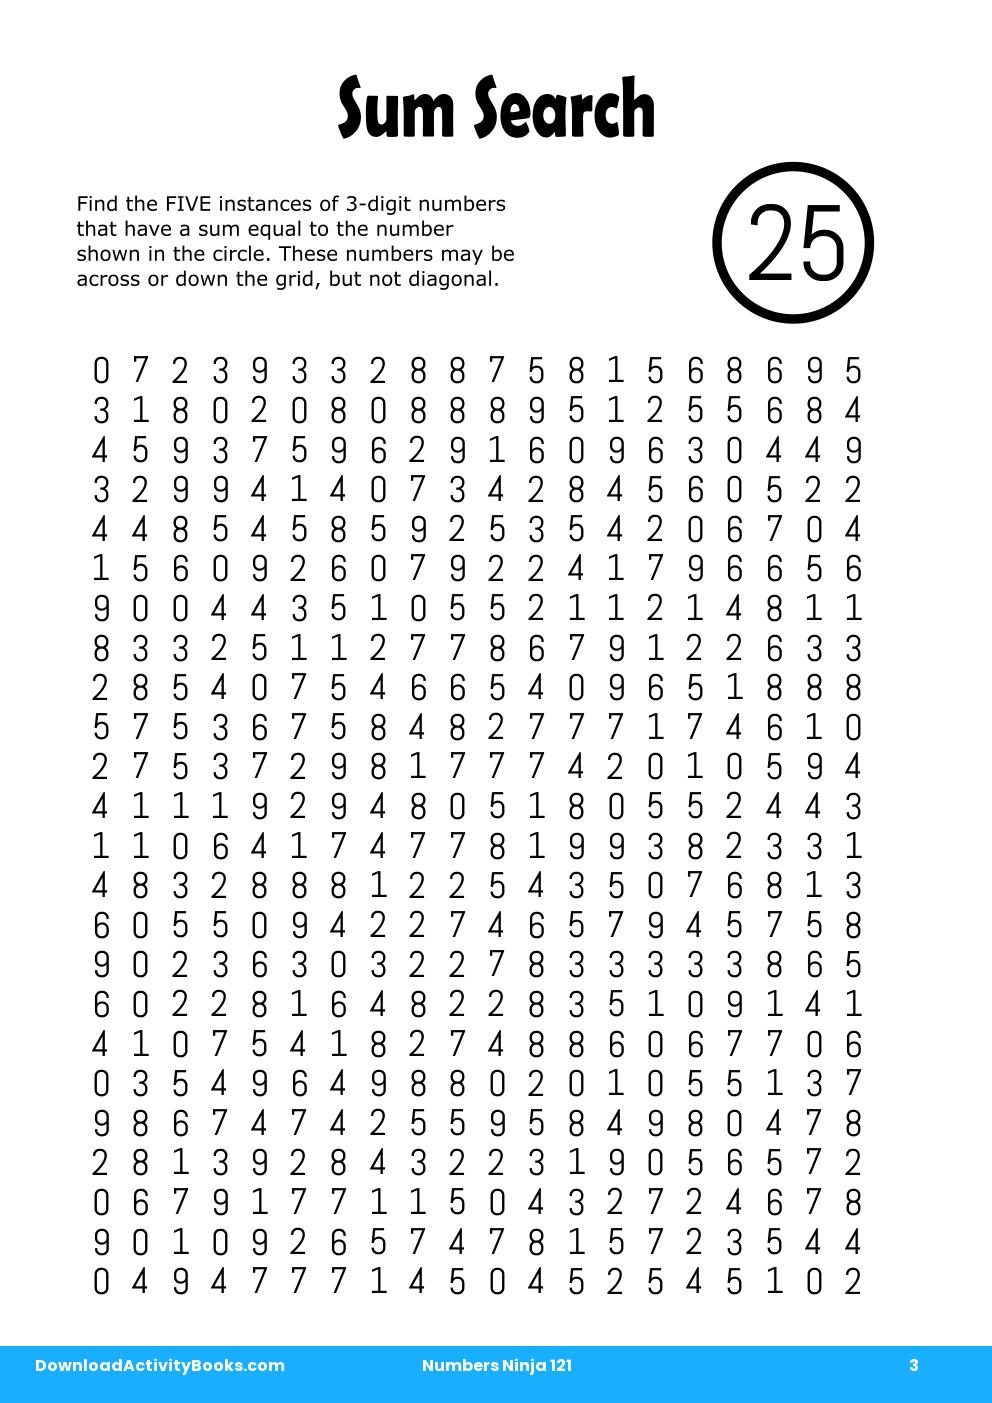 Sum Search in Numbers Ninja 121